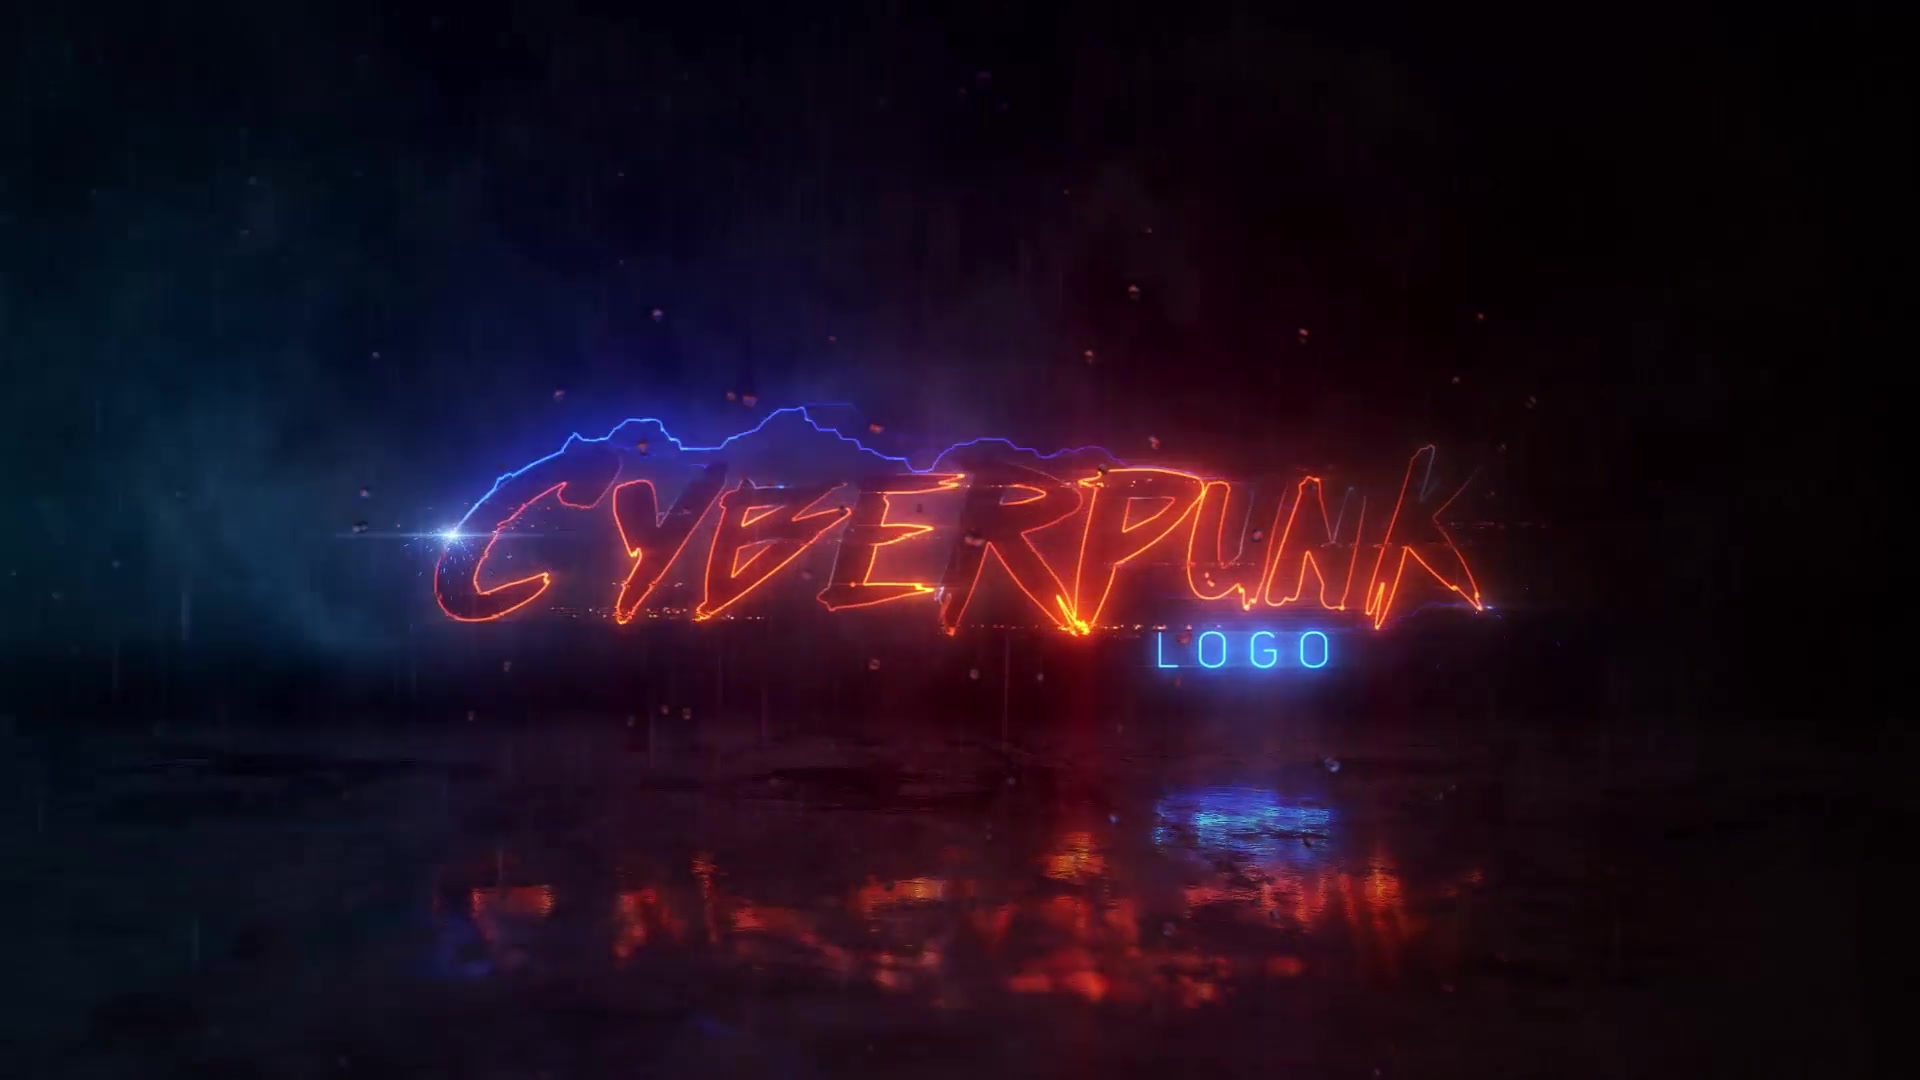 Cyberpunk logo after effects фото 1